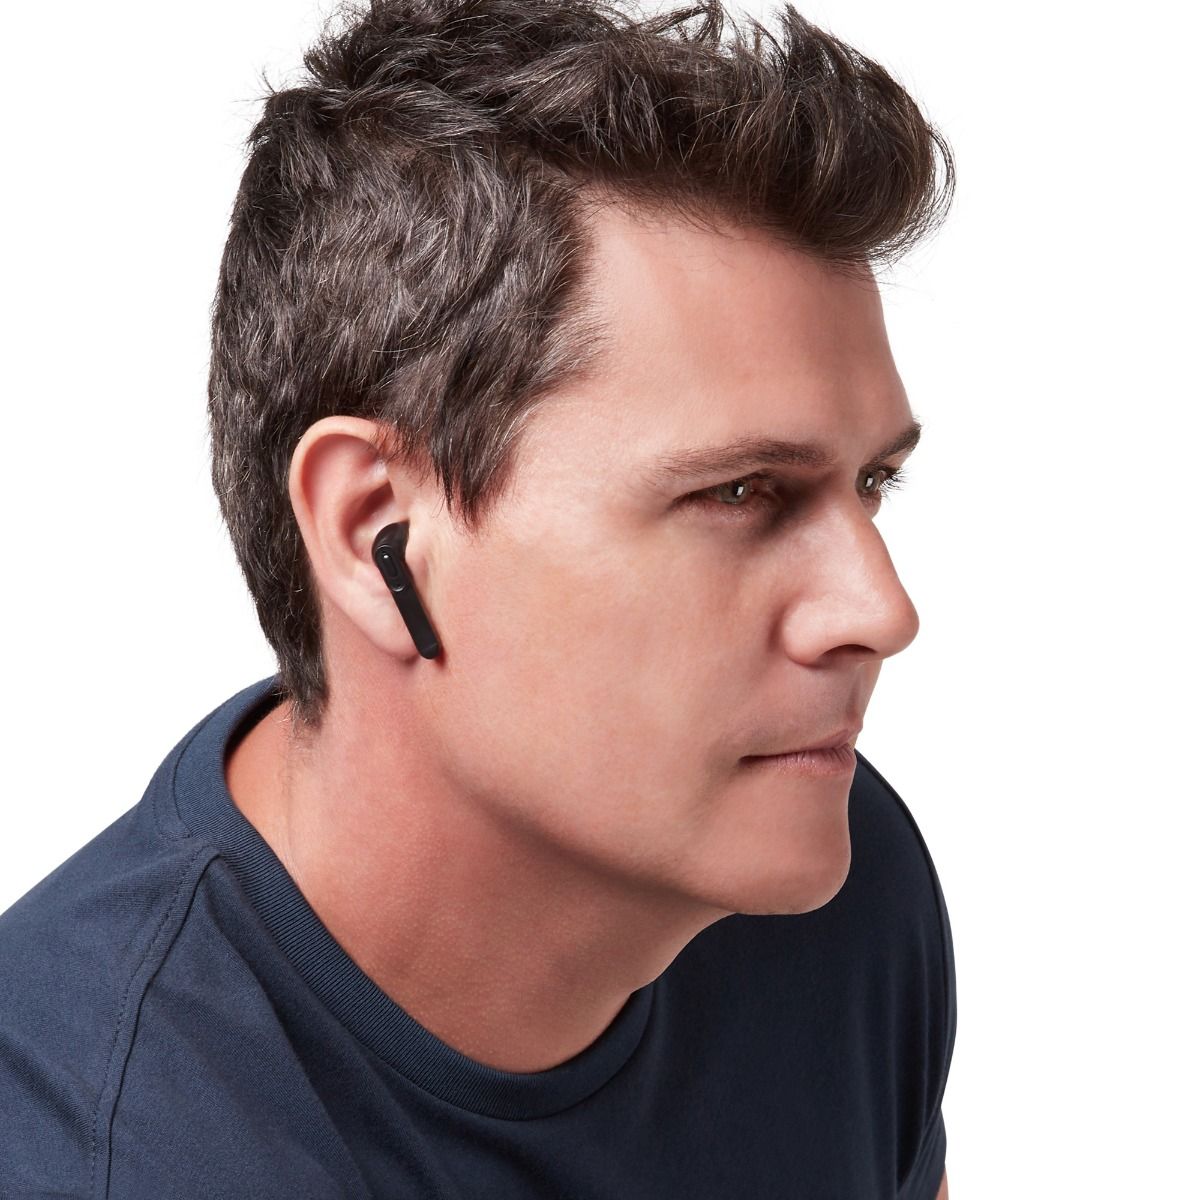 mbeat E1 True Wireless Earbuds-Headphones-PEROZ Accessories